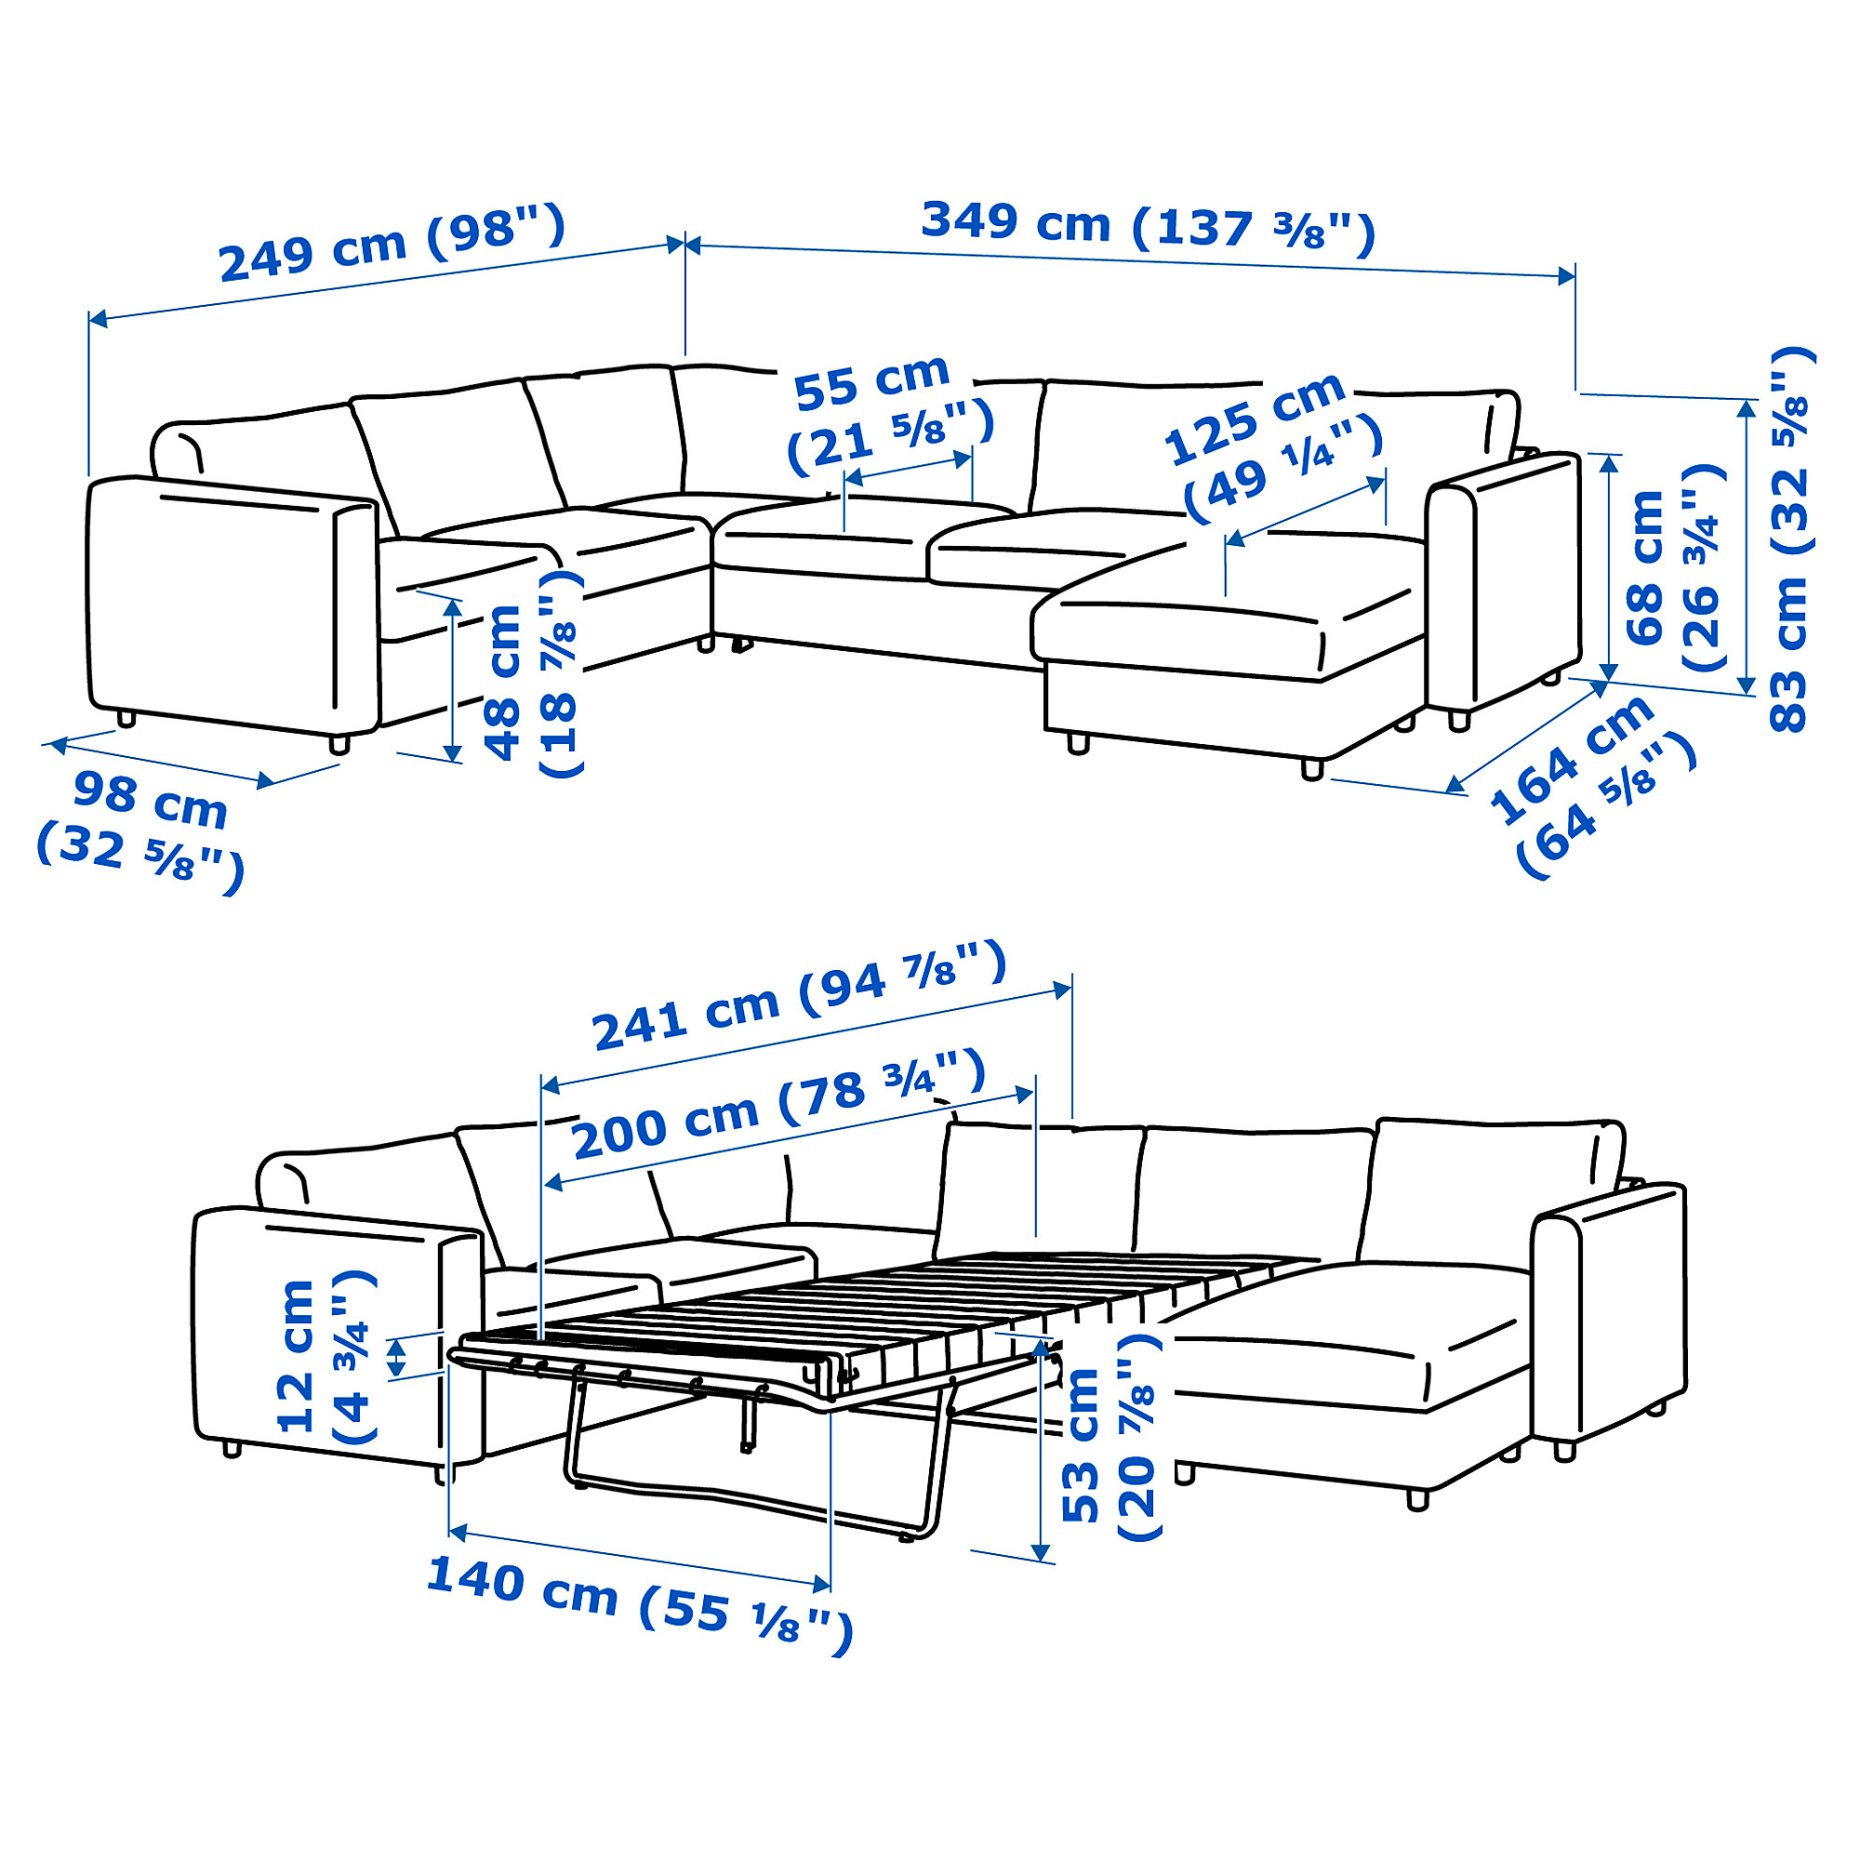 VIMLE, γωνιακός καναπές-κρεβάτι, 5 θέσεων με σεζλόνγκ, 095.452.66